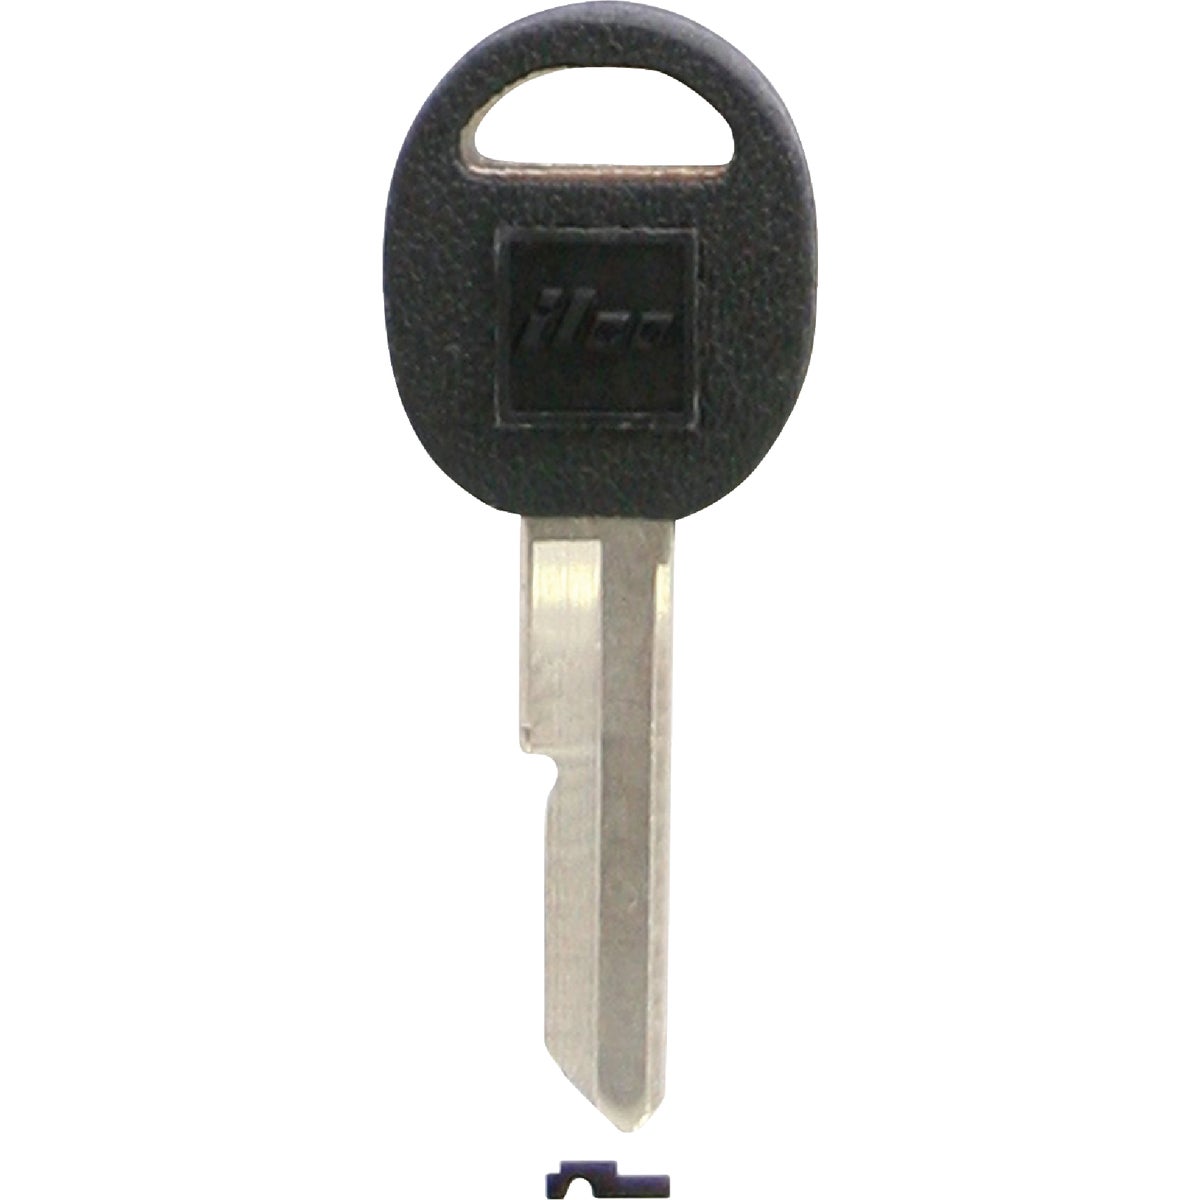 ILCO GM Nickel Plated Automotive Key, B51-P / B51P (5-Pack)